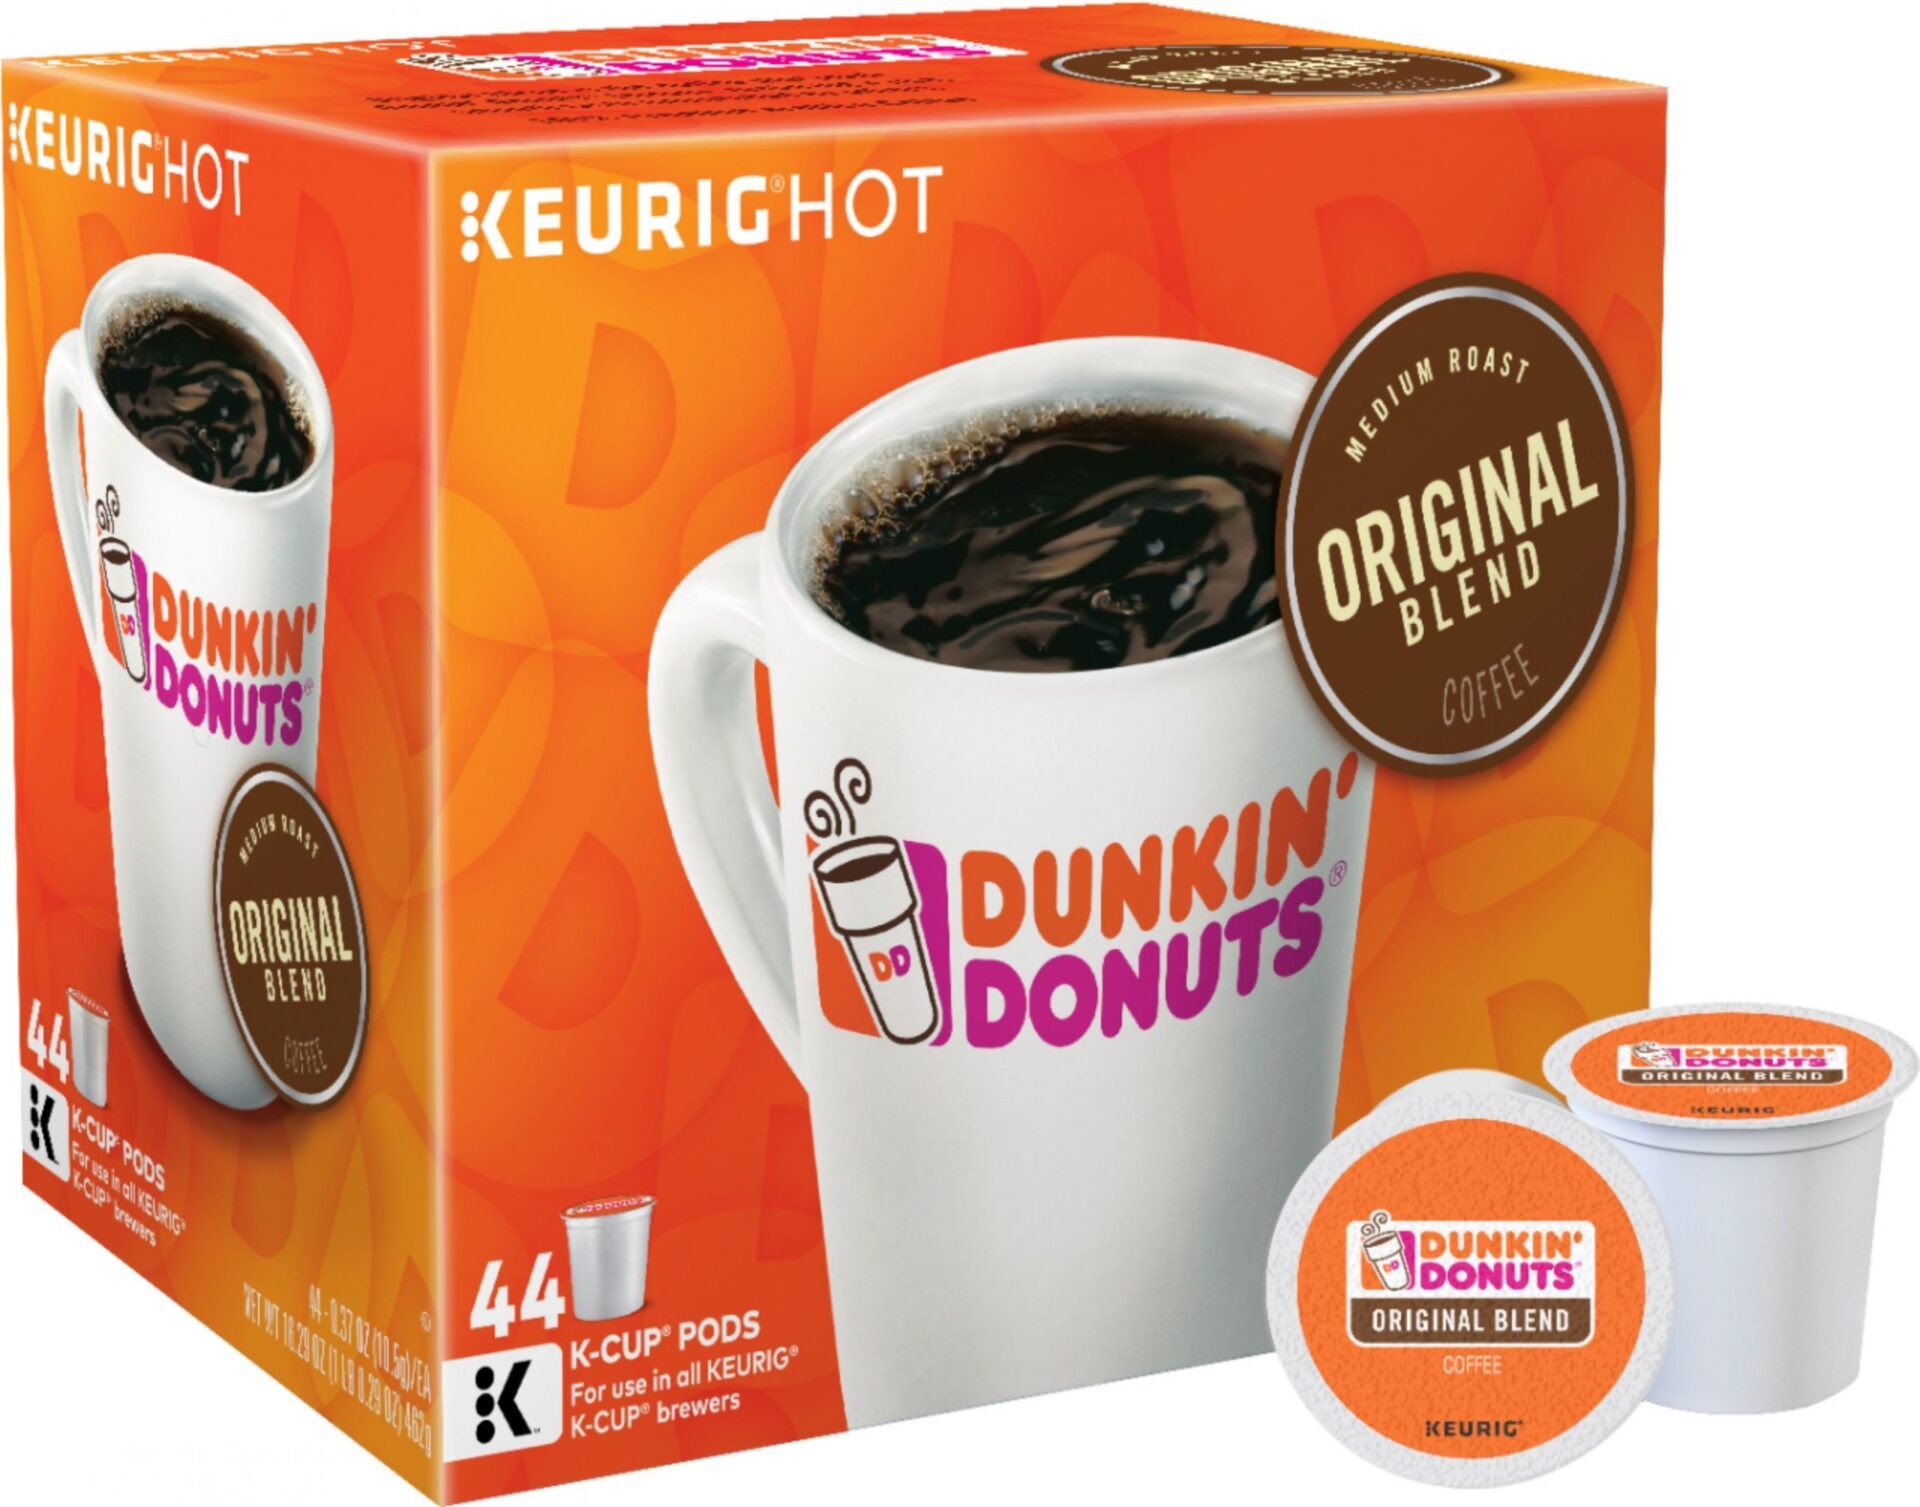 https://kcupsforsale.com/wp-content/uploads/2021/06/Dunkin-Donut-44-pack-Original-scaled.jpg